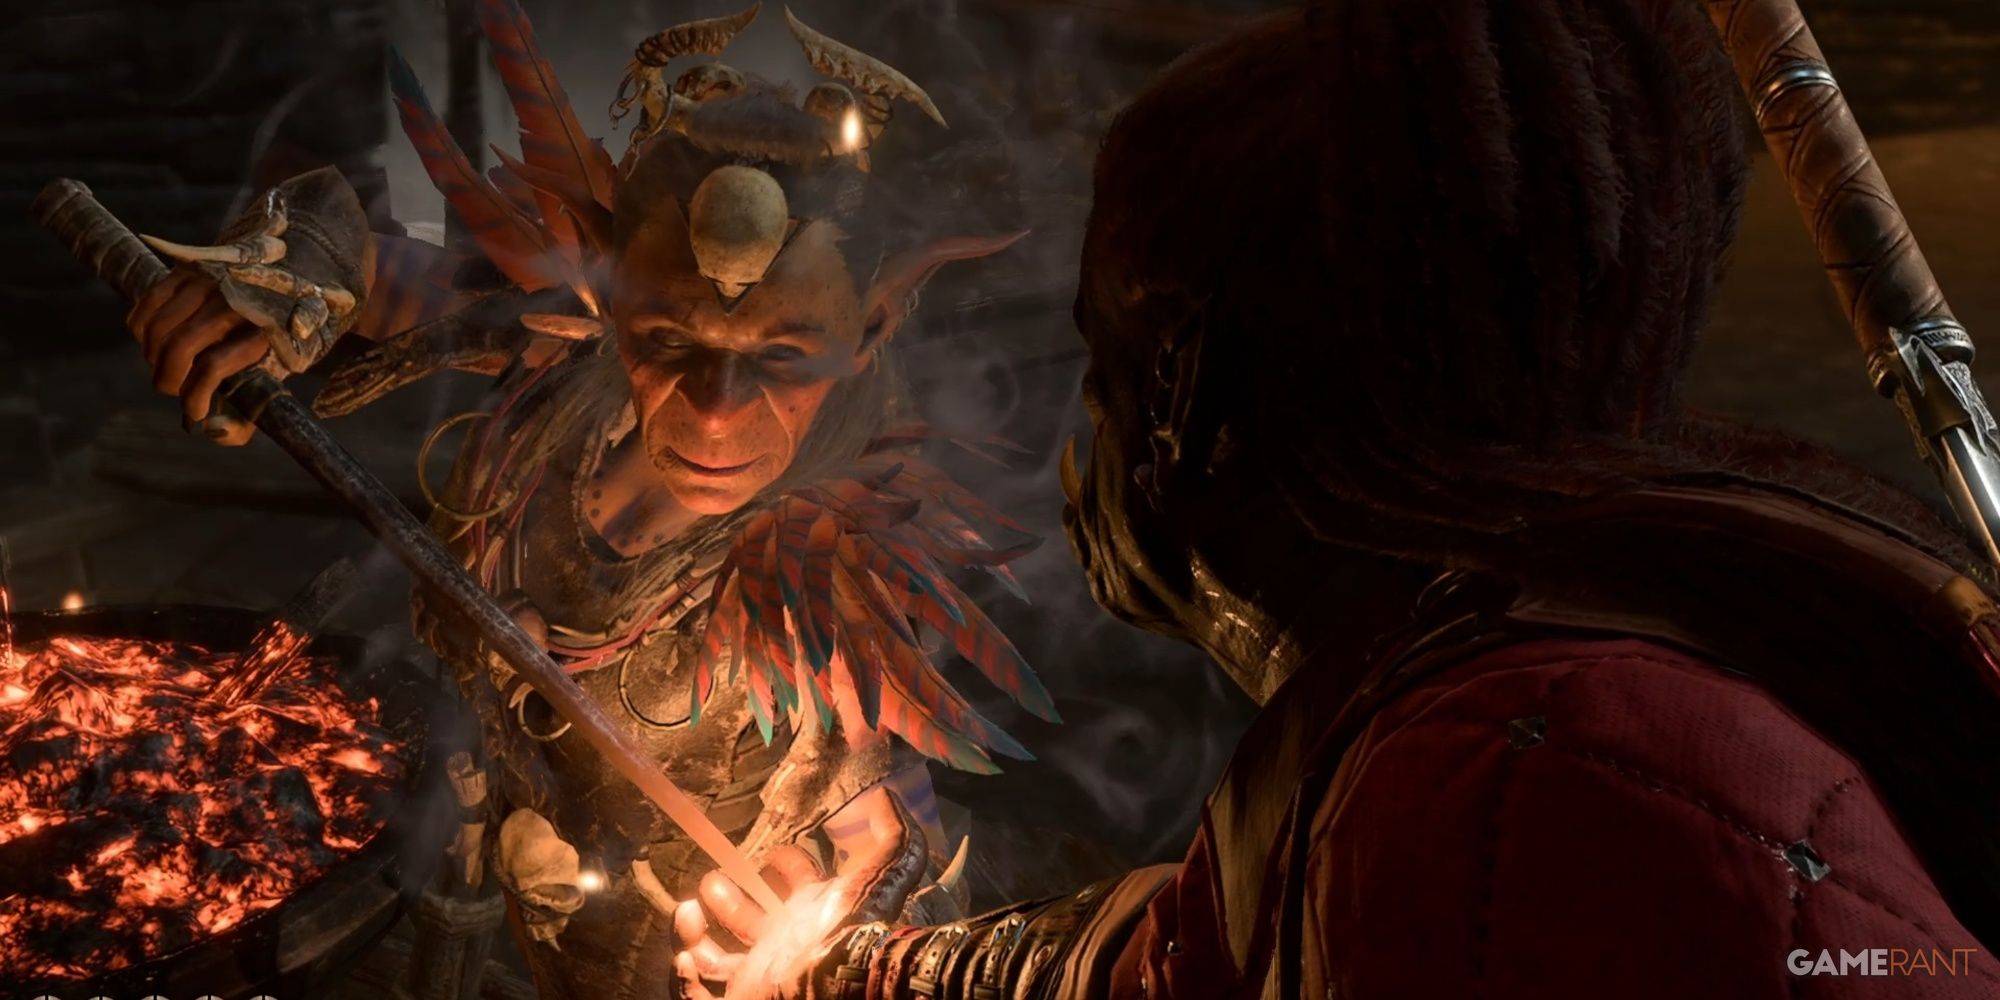 A goblin sticks a staff into the protagonist's hand in Baldur's Gate 3